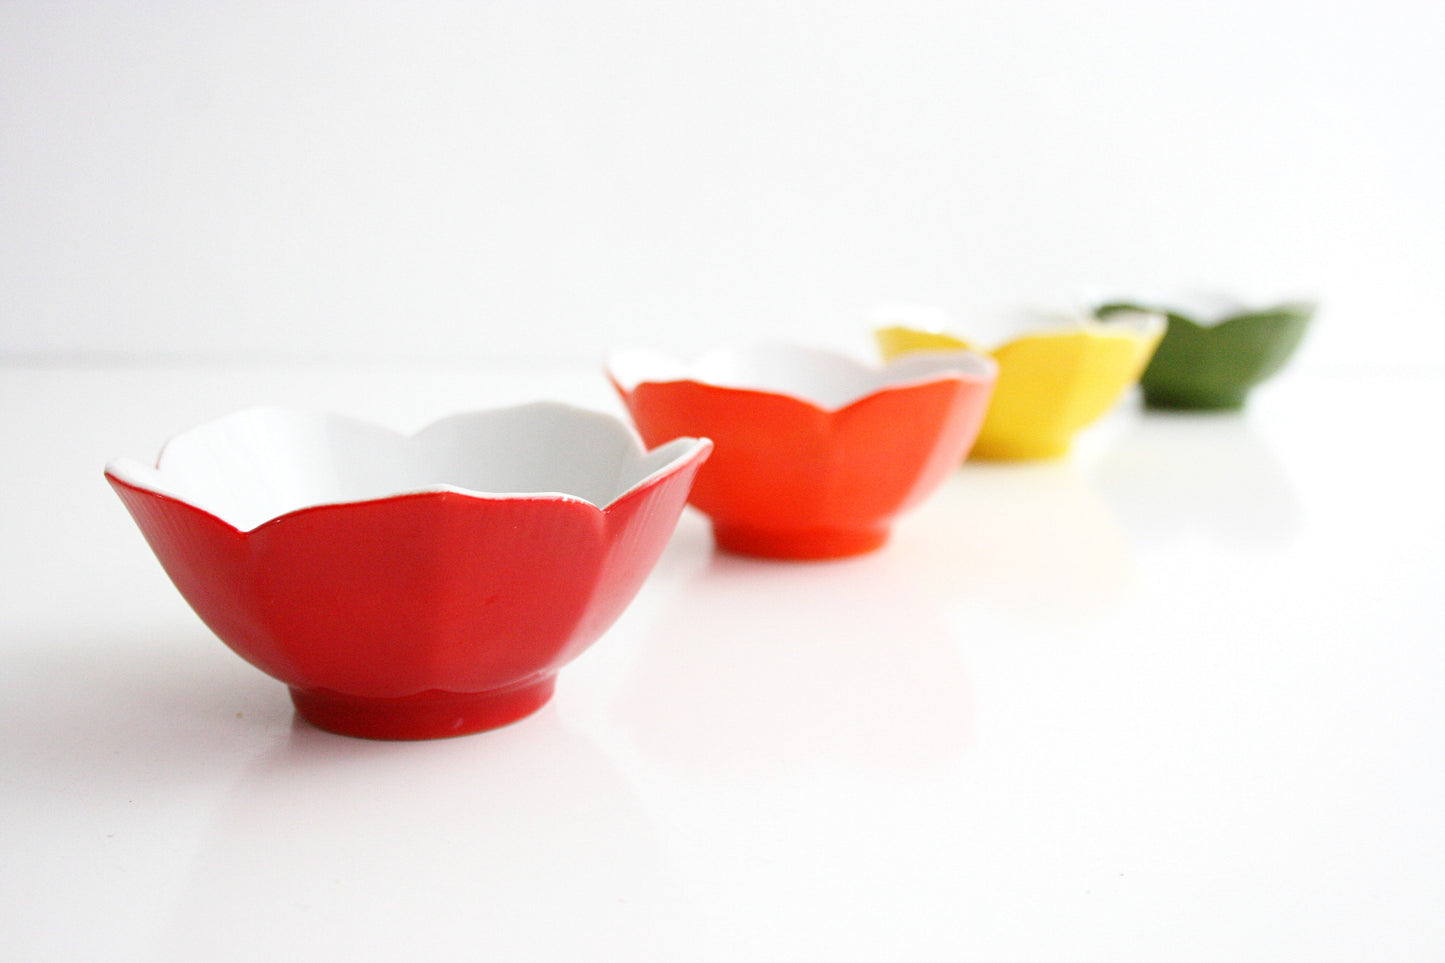 SOLD - Set of Four Colorful Vintage Lotus Bowls